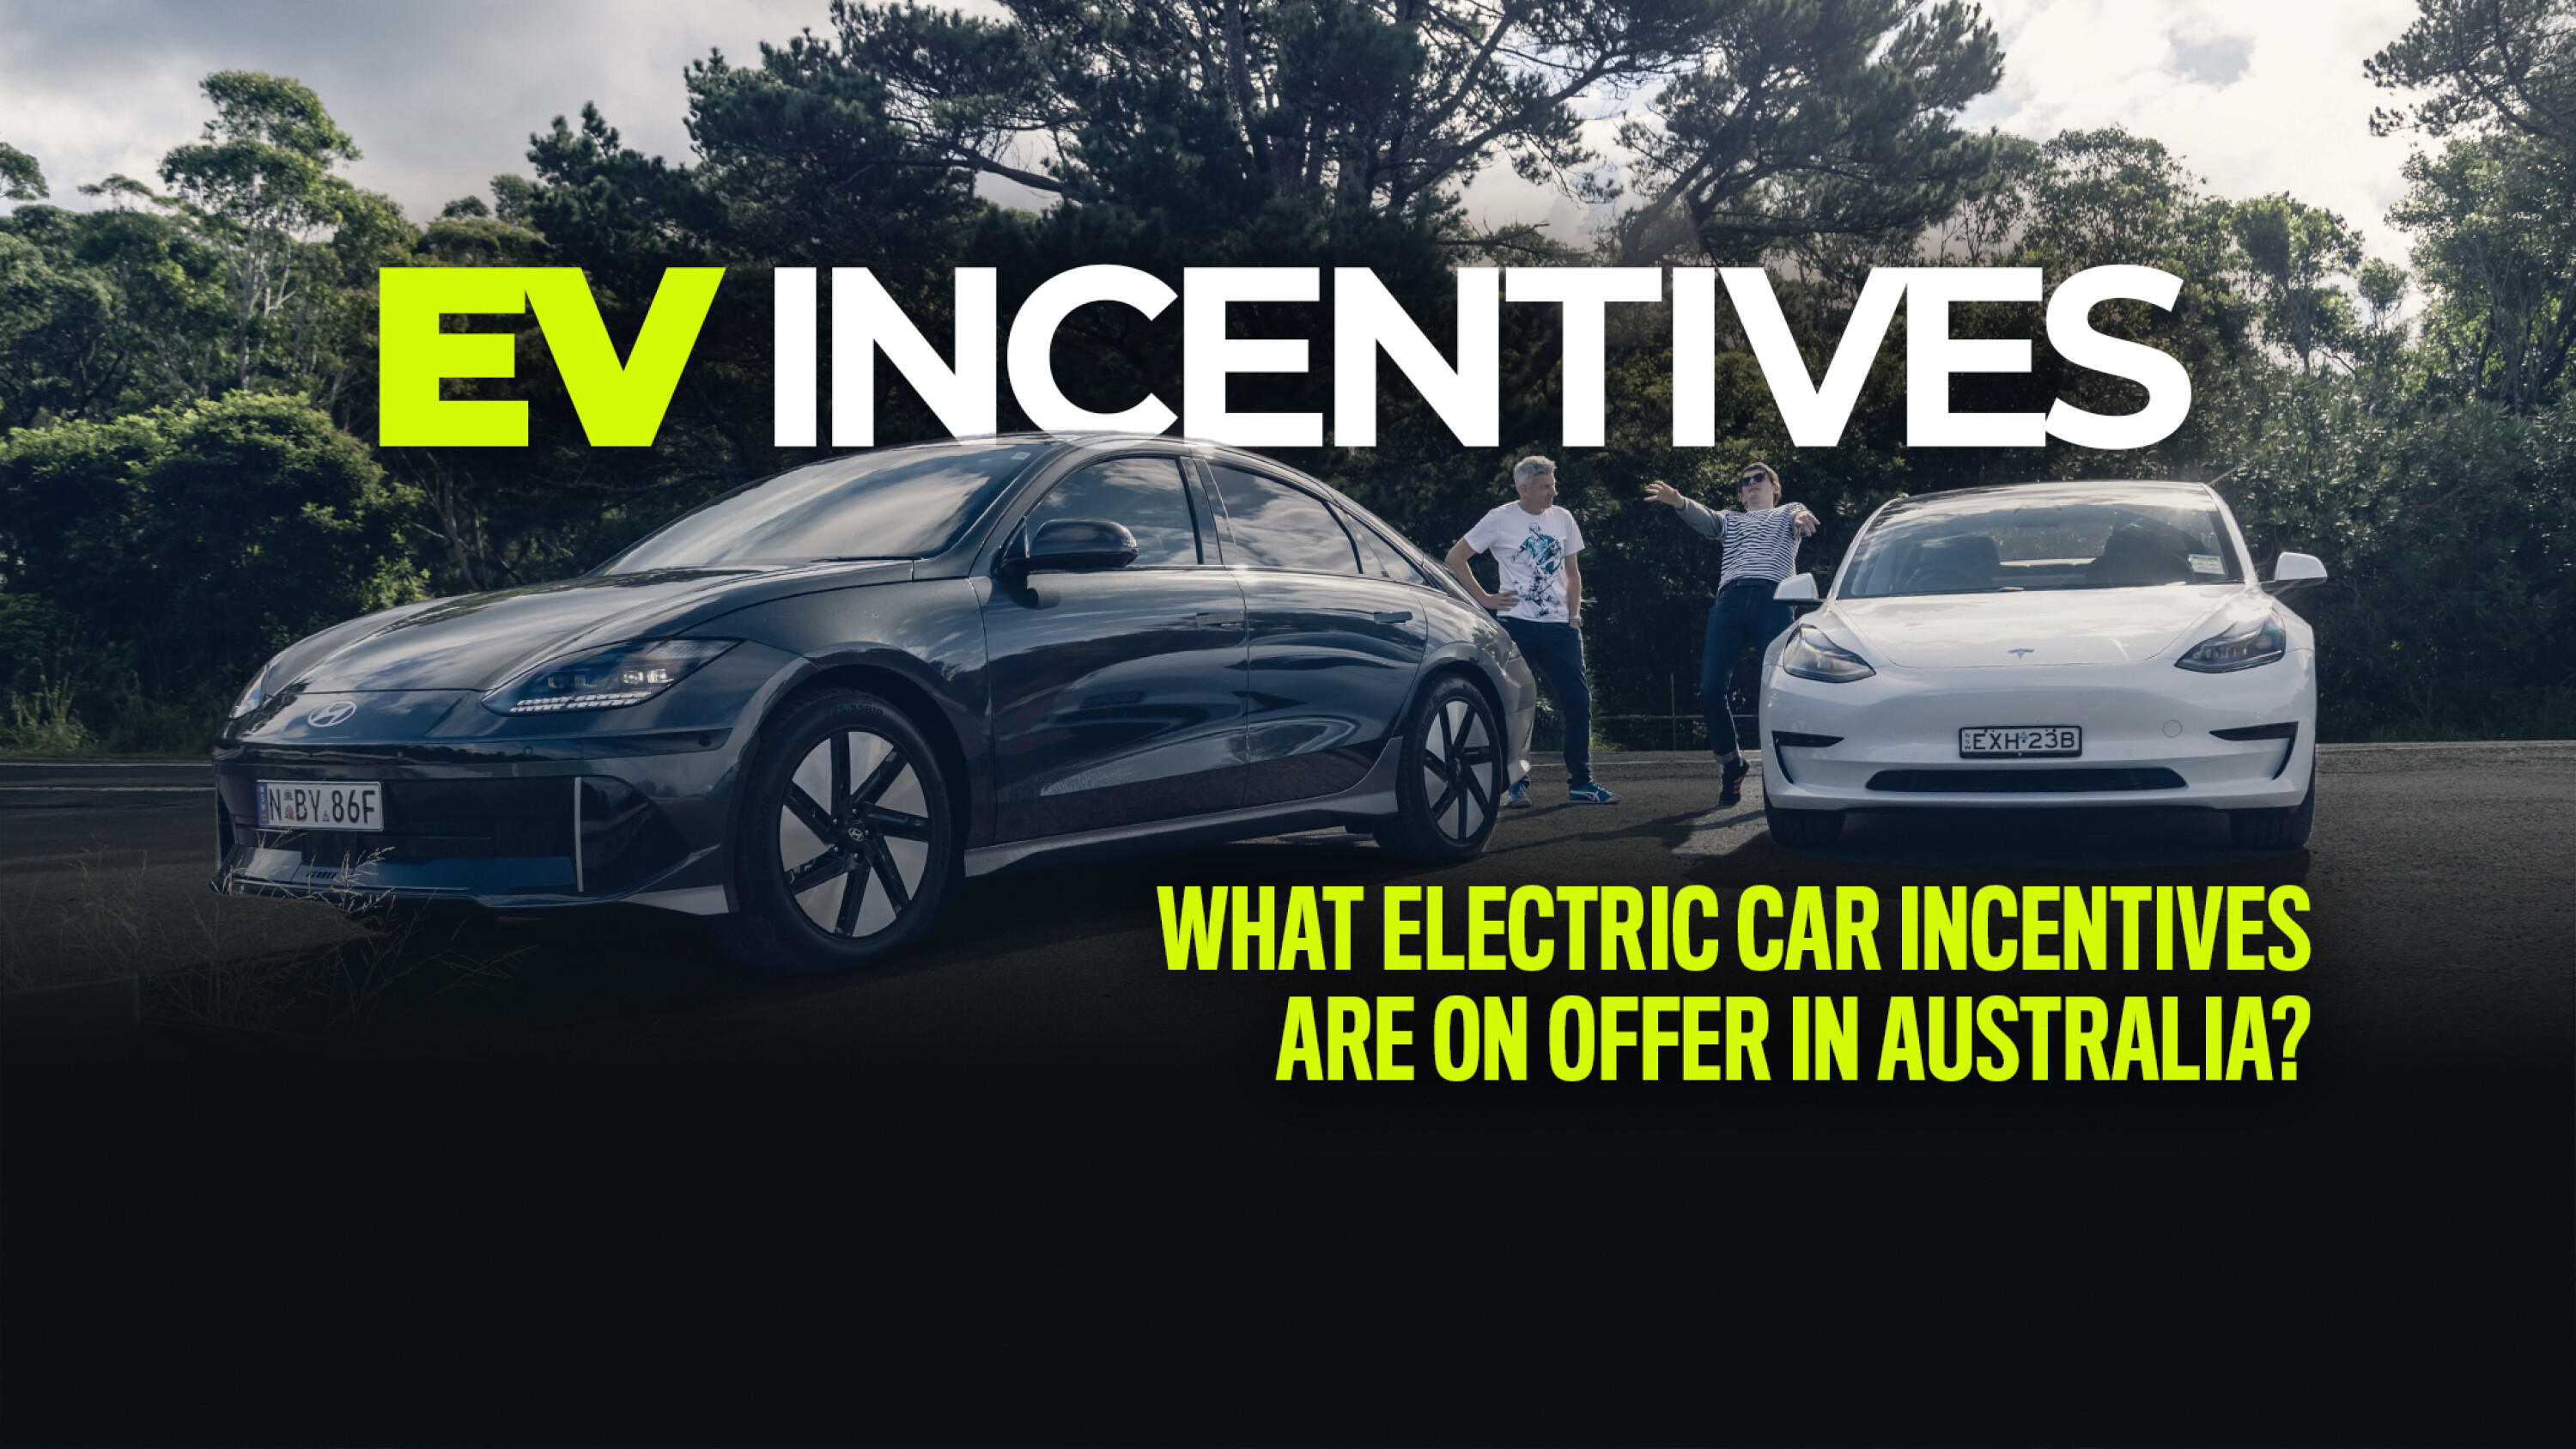 22e21724/electric vehicle incentives australia jpg